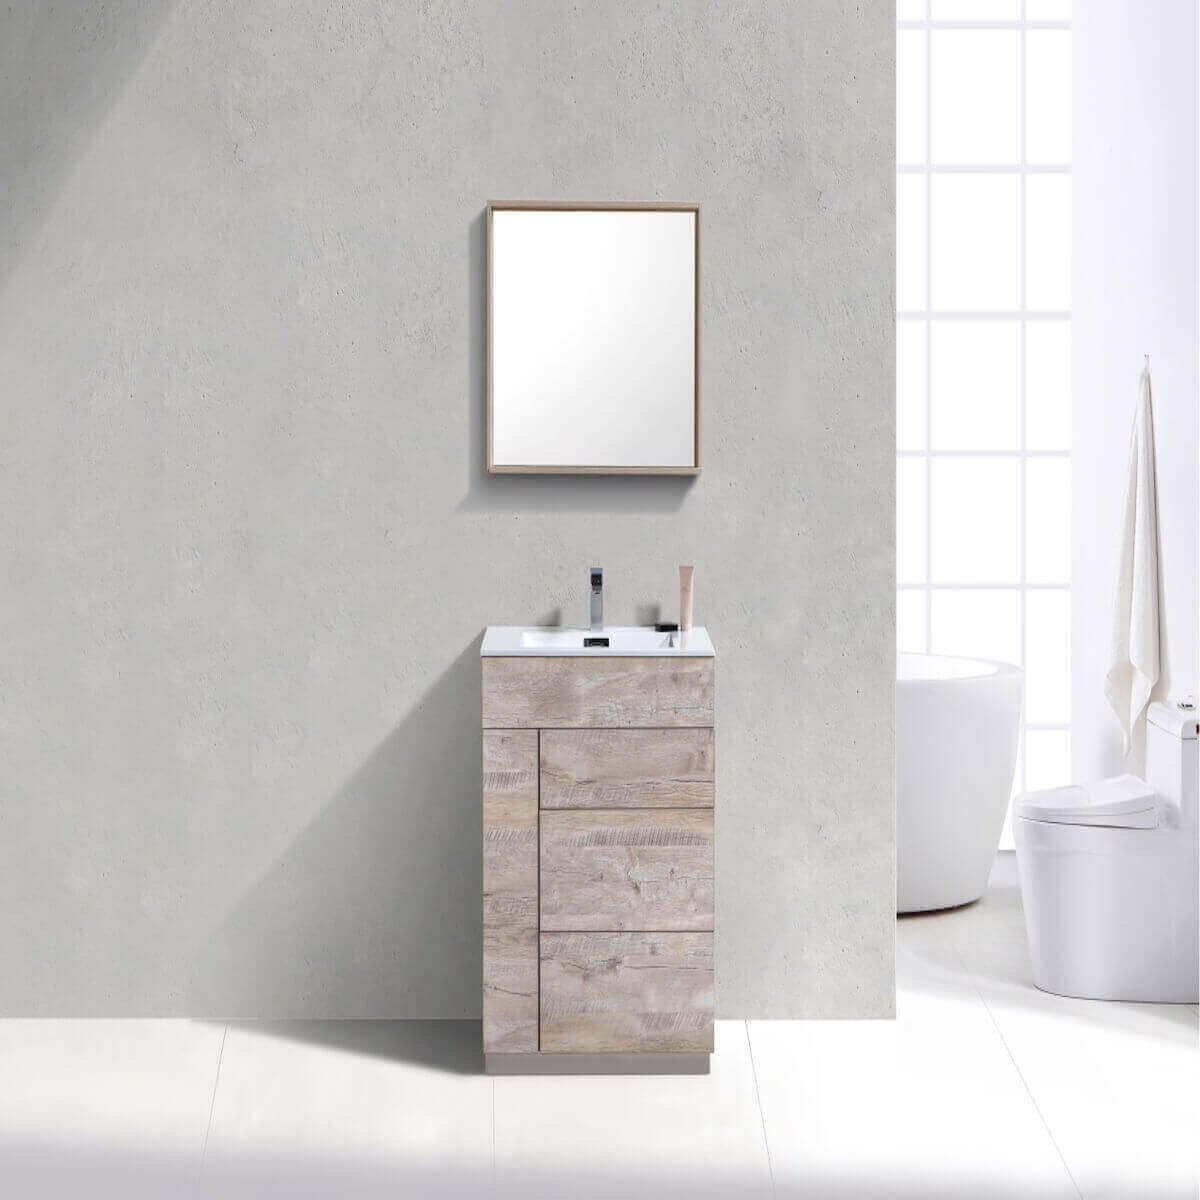 KubeBath Milano 30" Nature Wood Floor Mount Single Vanity KFM30-NW in Bathroom #finish_nature wood